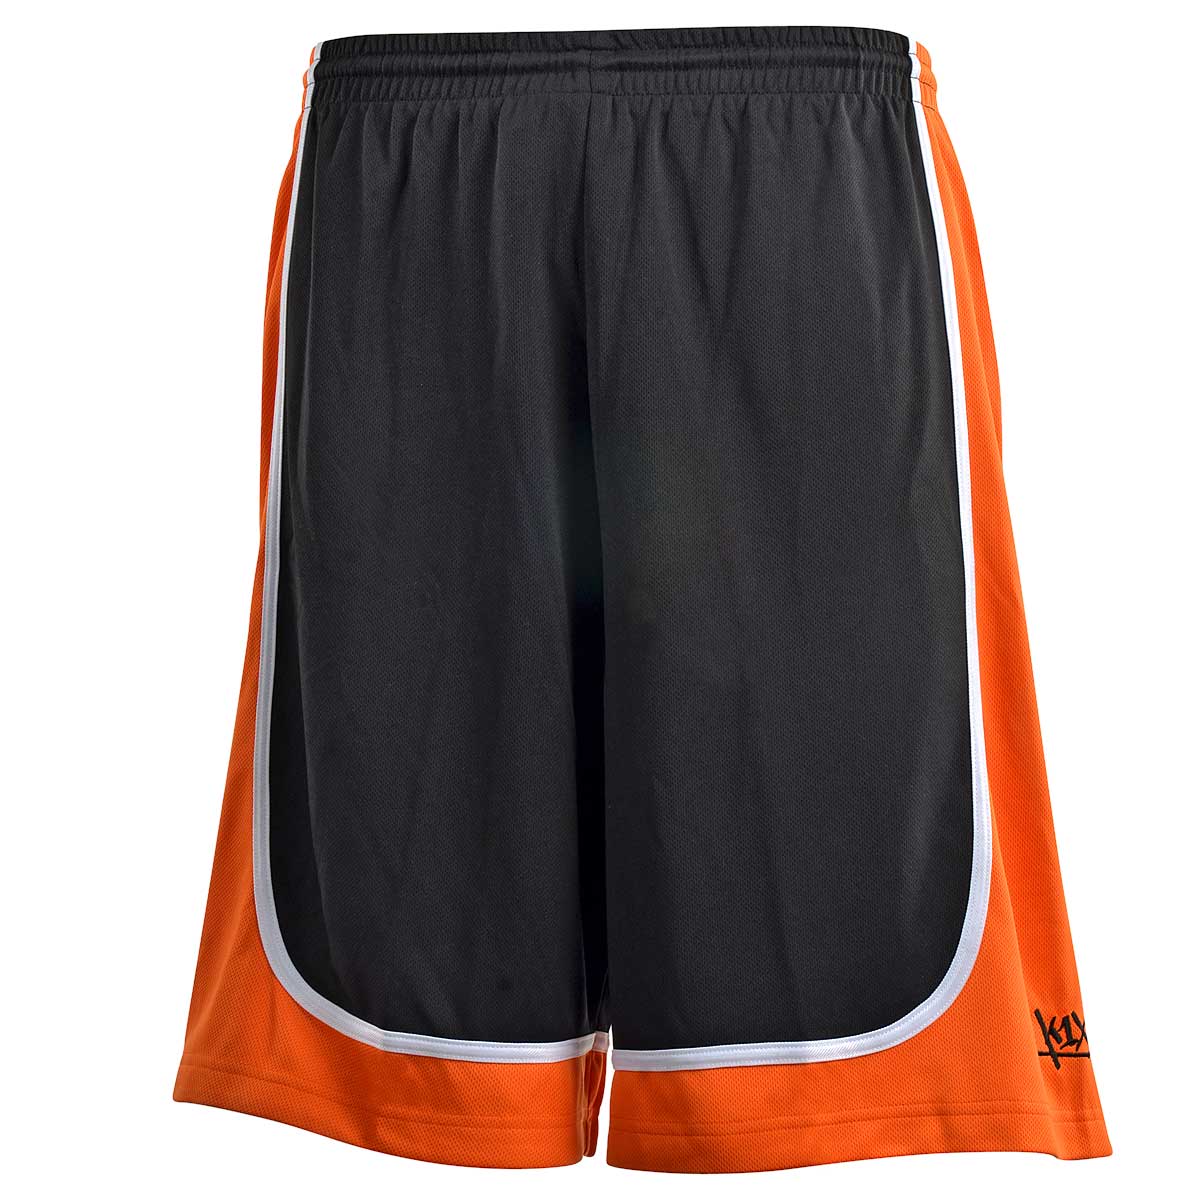 K1X K1X Hardwood League Uniform Shorts Mk2, Black/Orange/White